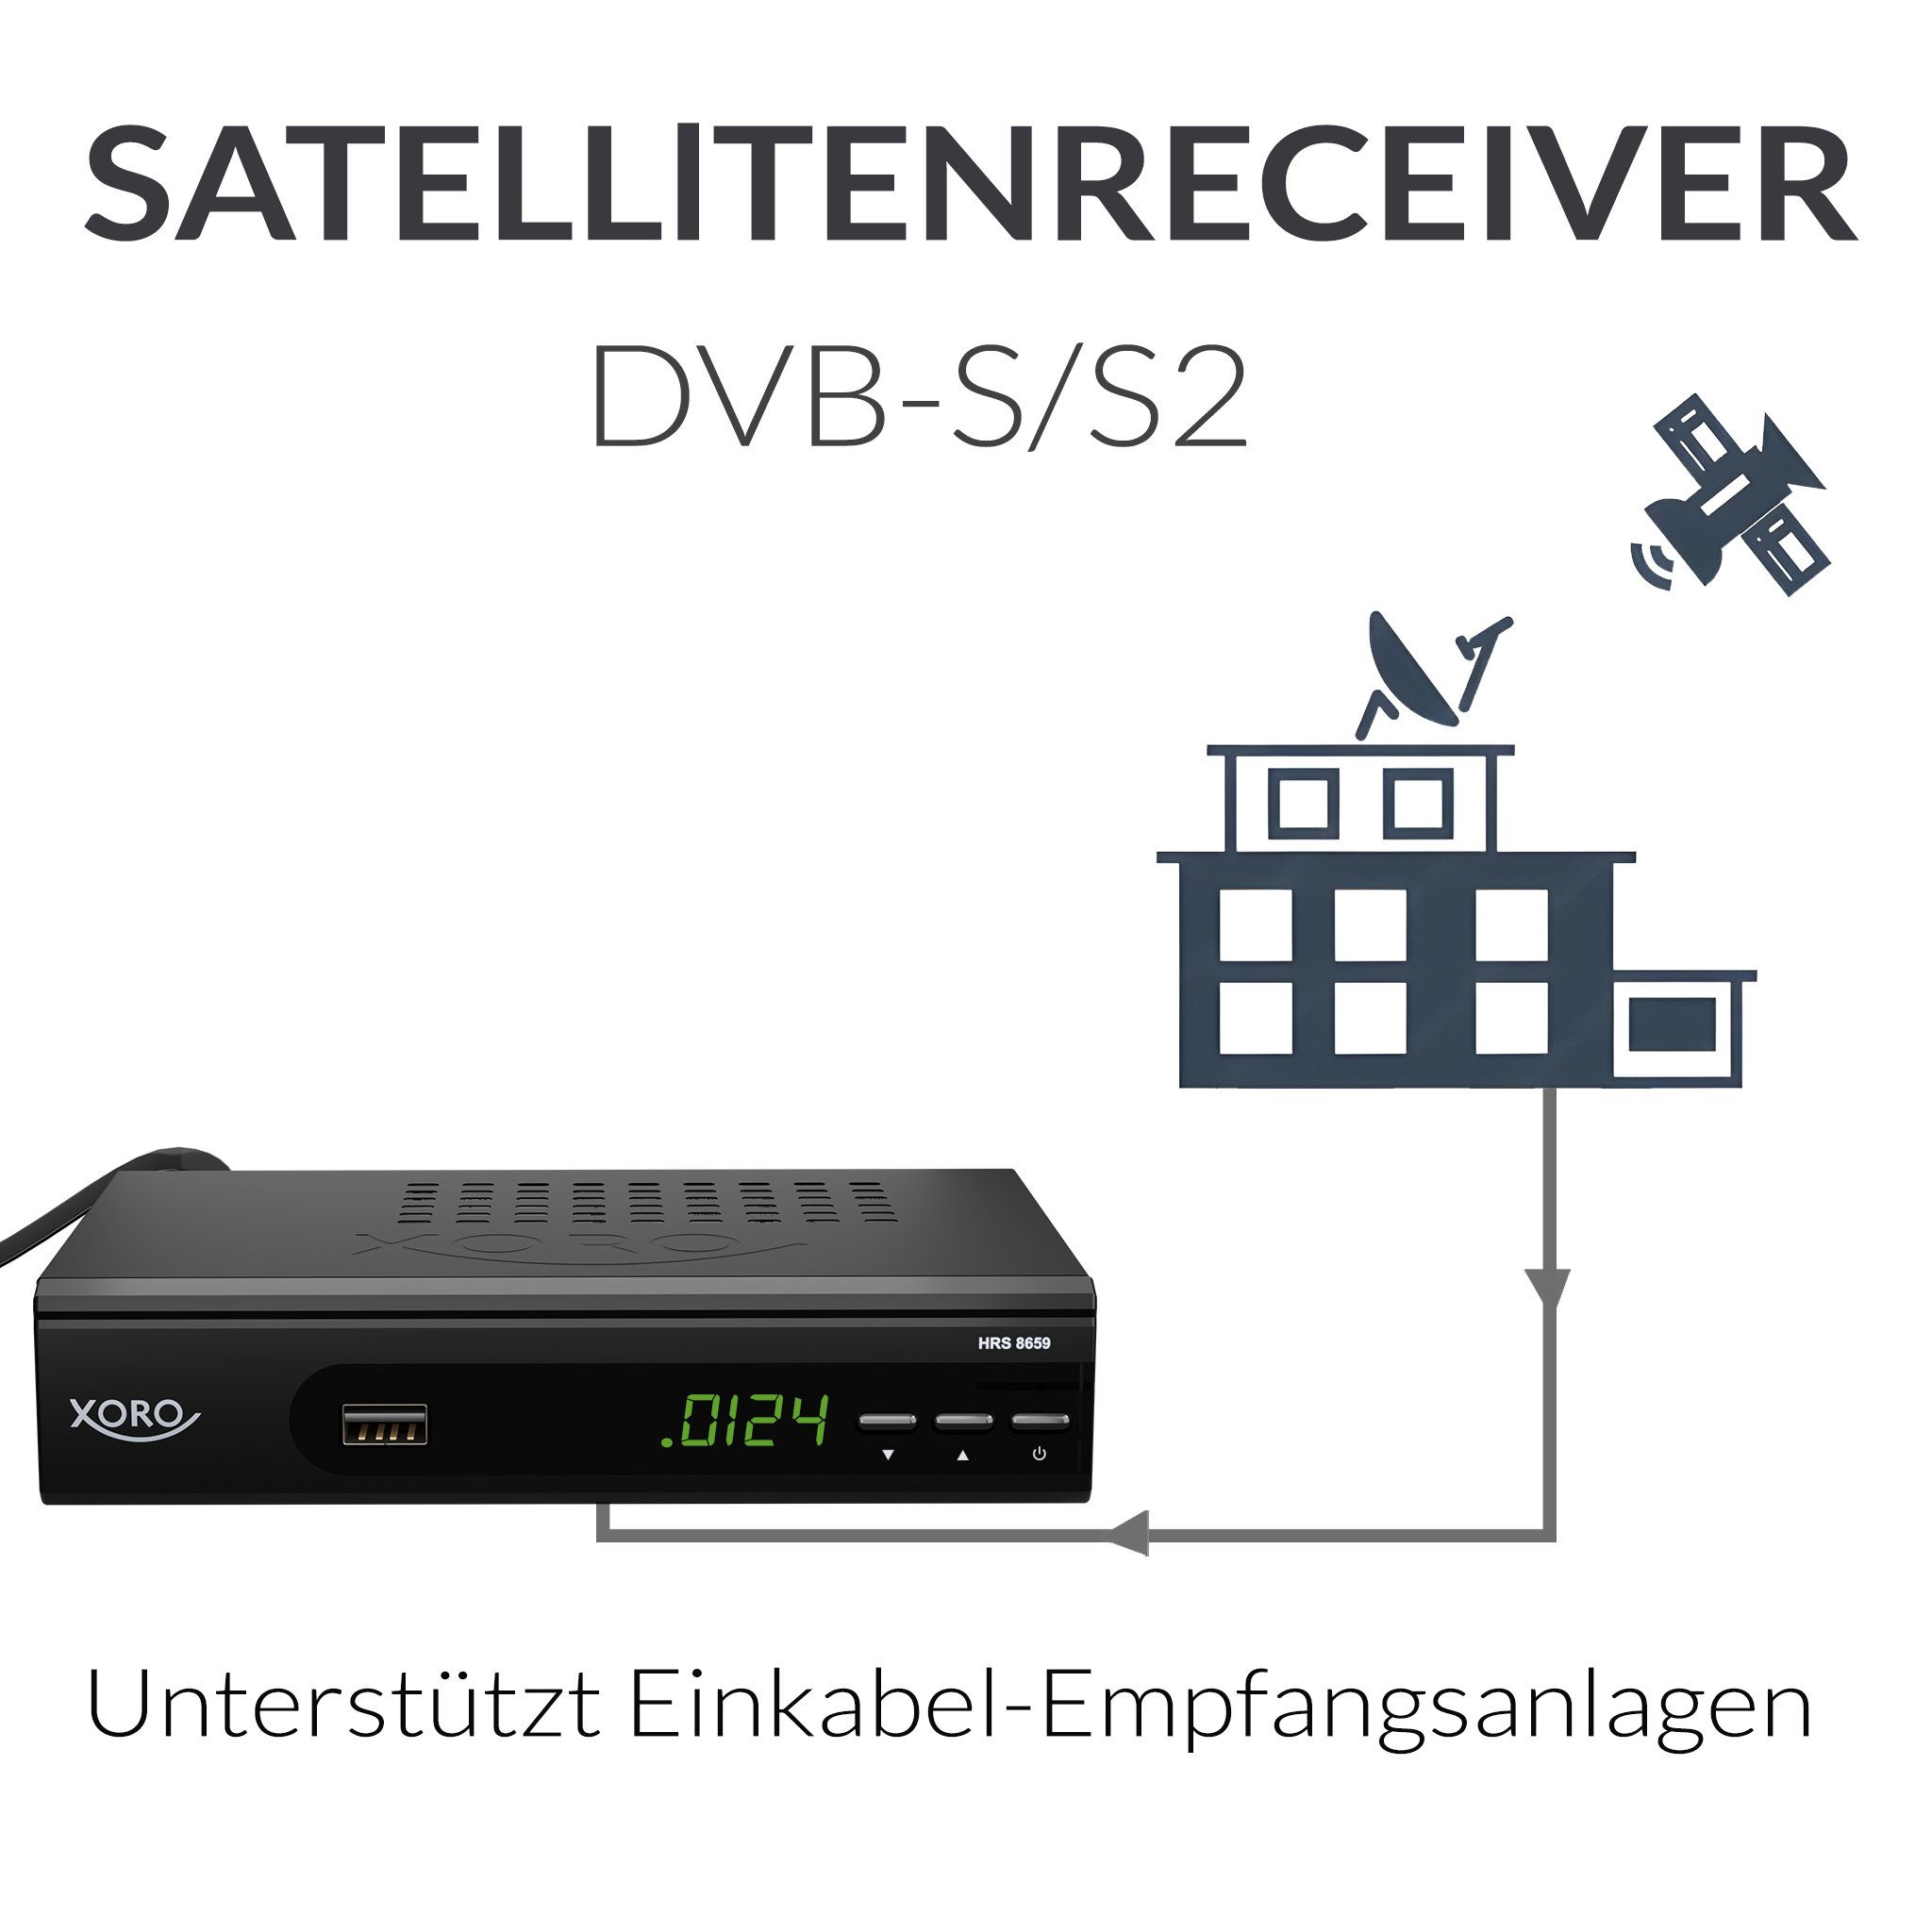 SAT-Receiver 8659 Xoro HRS USB (LAN, receiver black 2.0) XORO DVB-S2 HDMI,